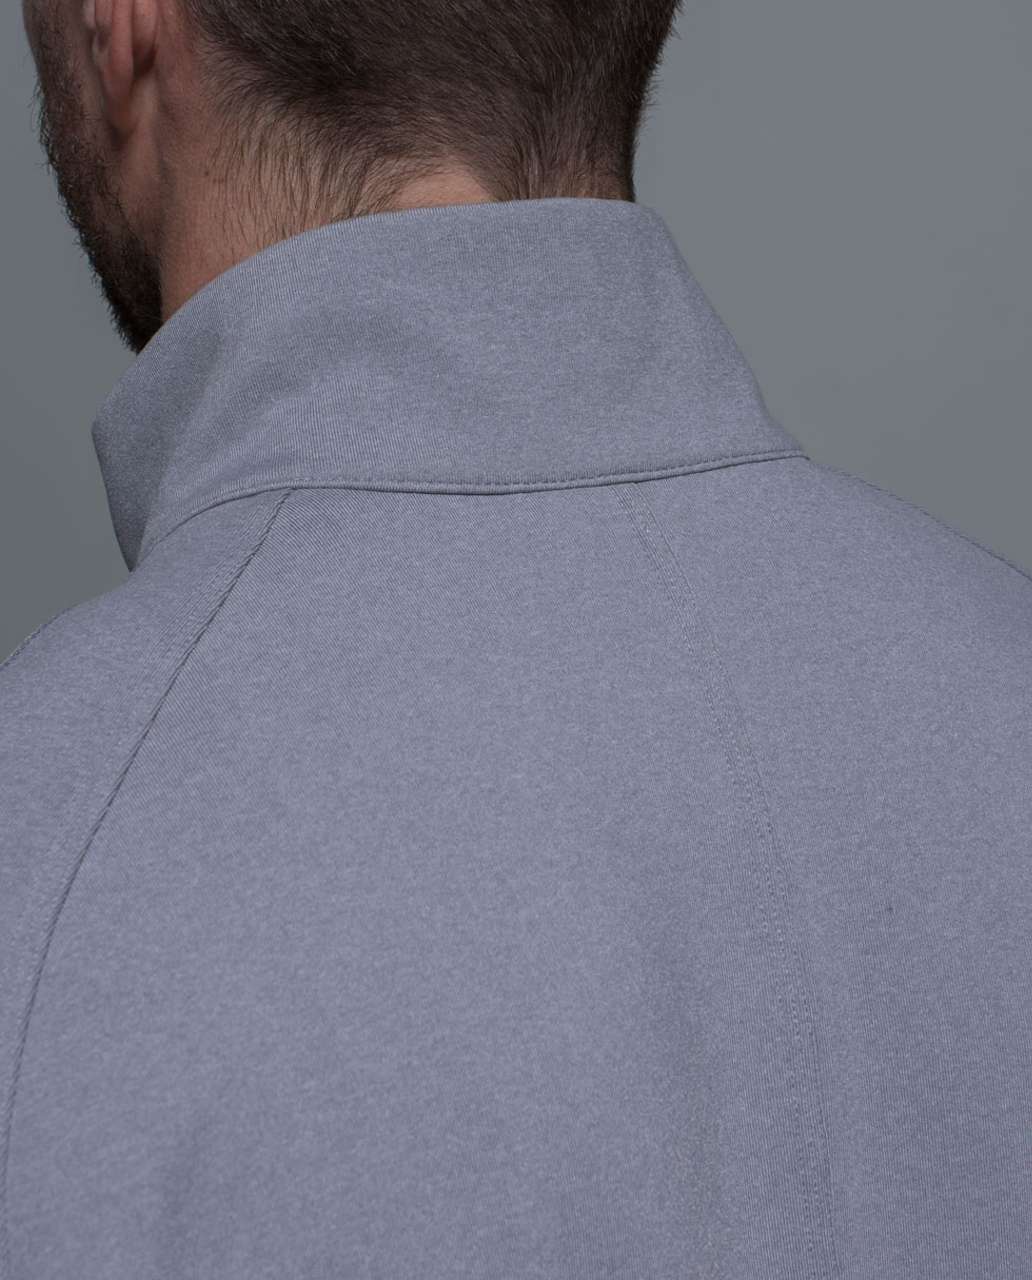 Lululemon Tactic Jacket - Heathered Medium Grey / Ambient Grey